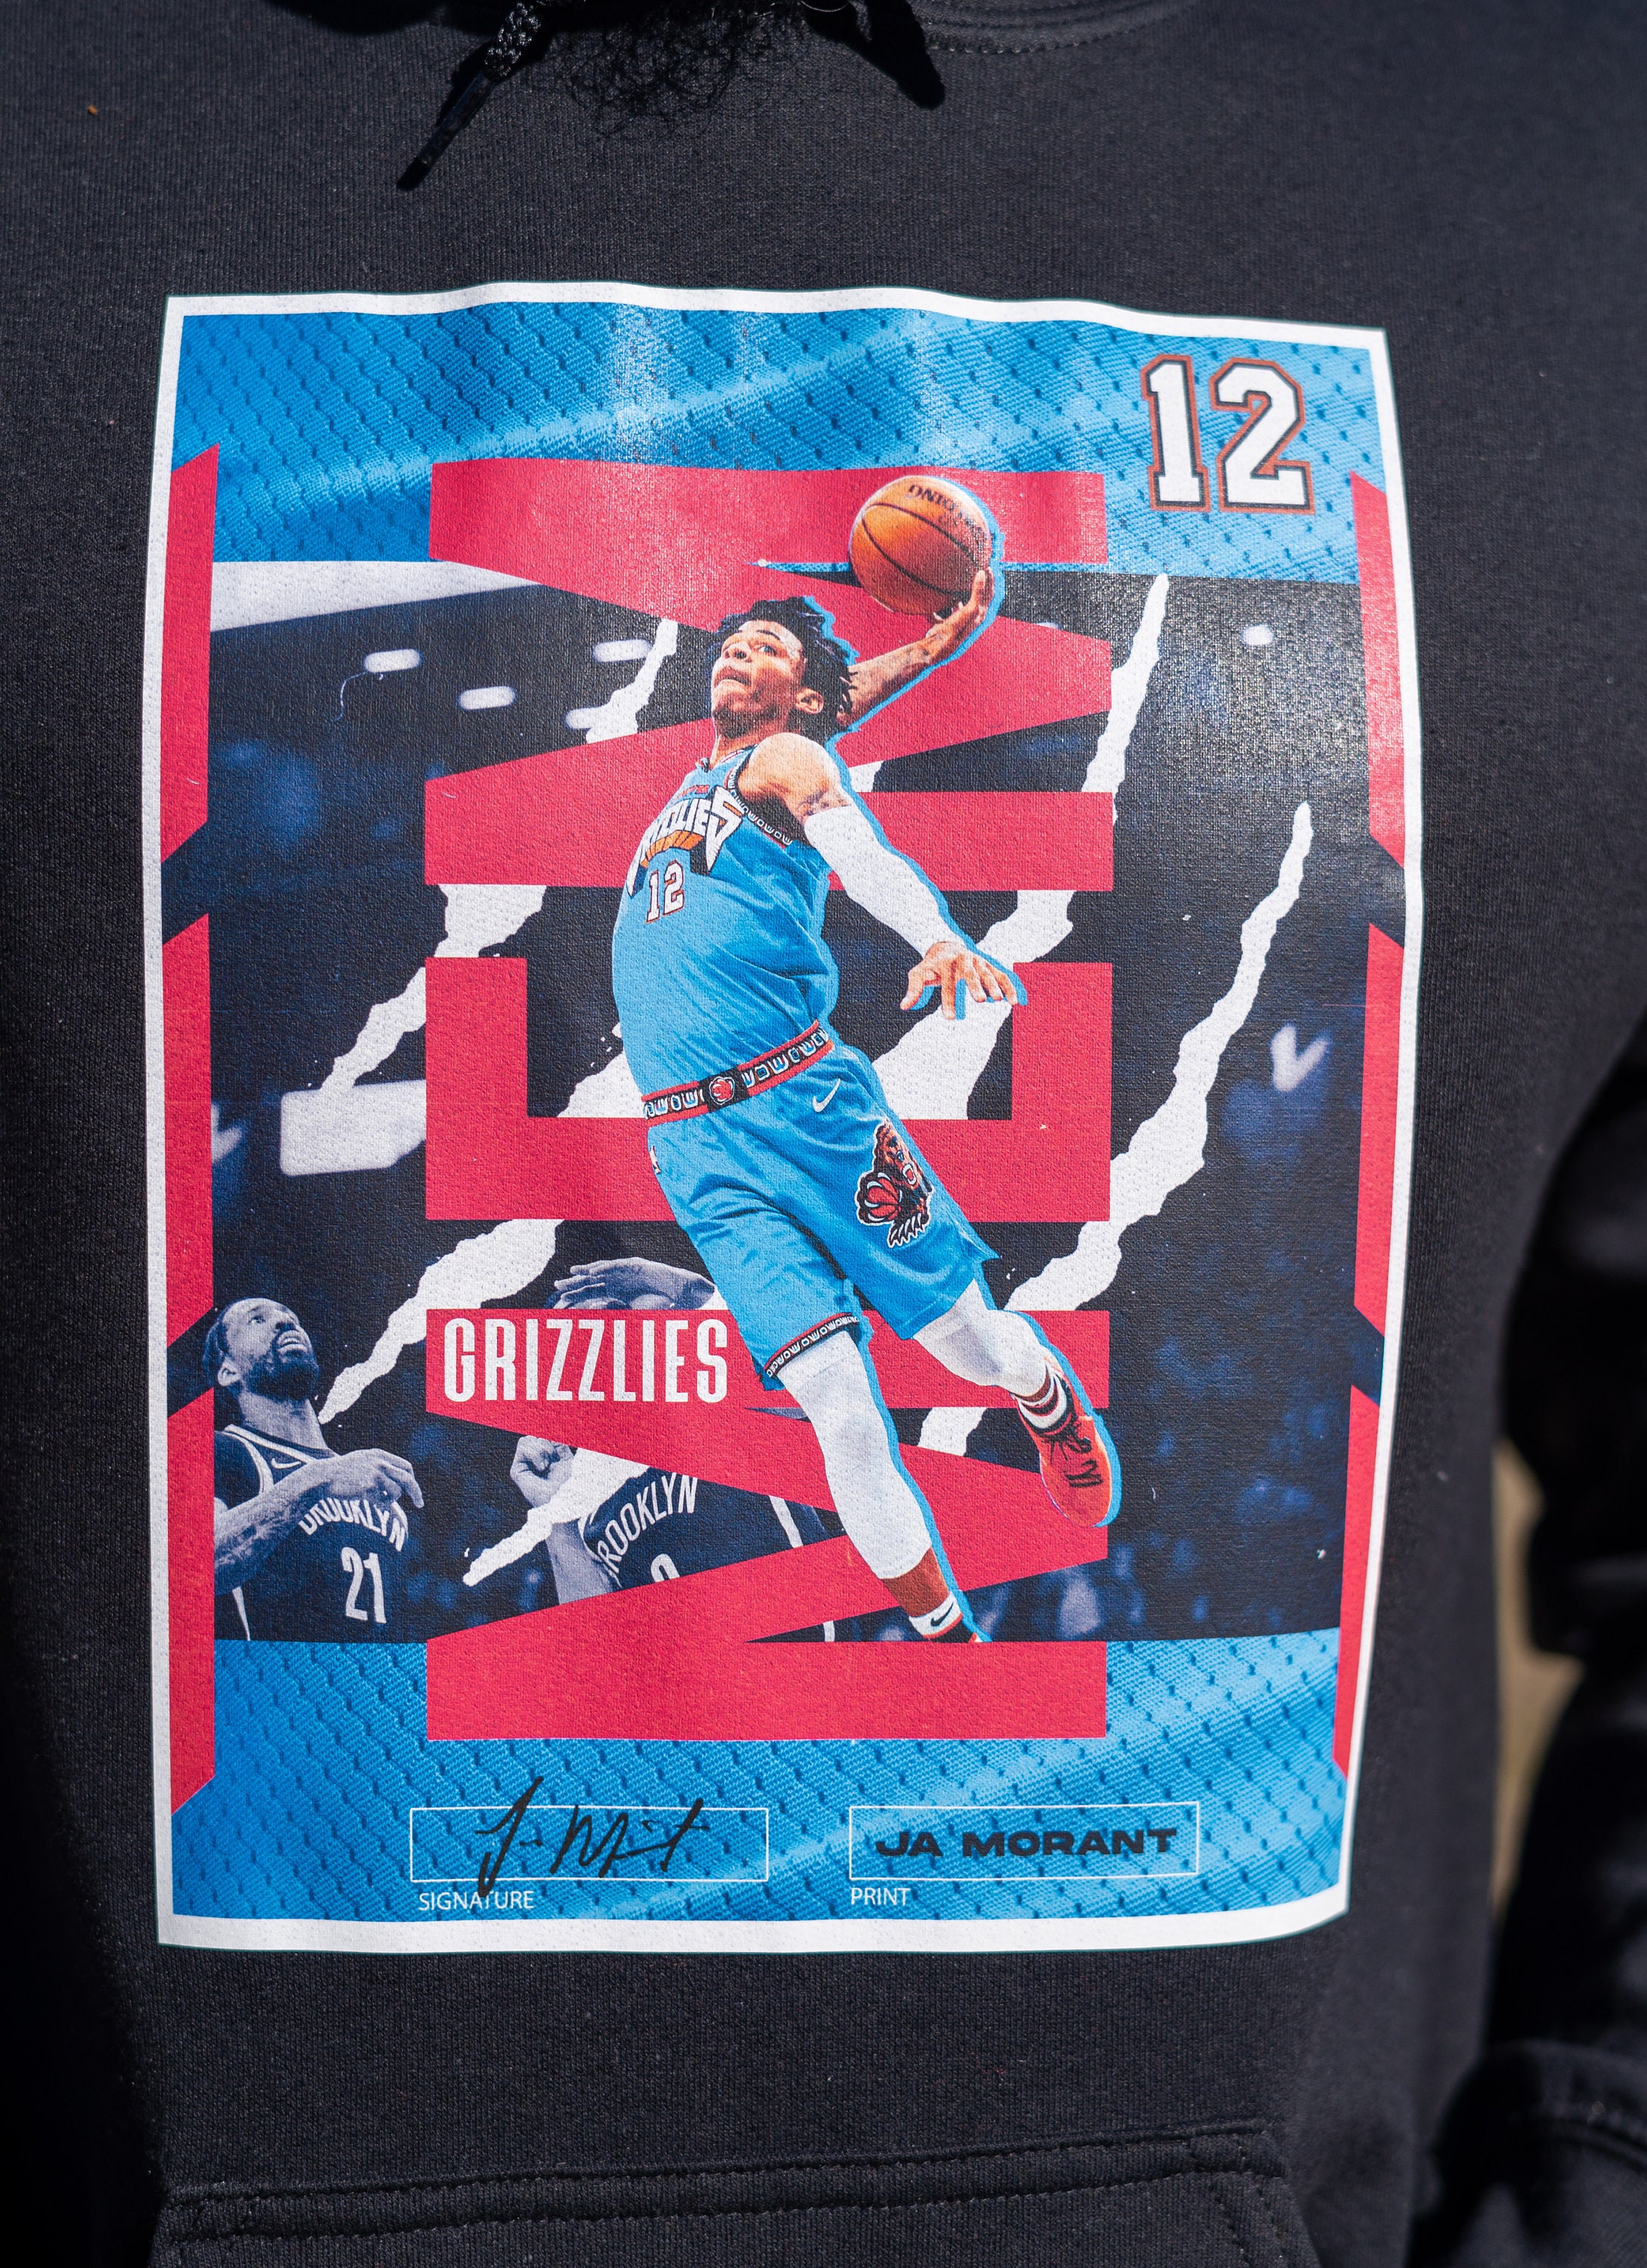 Ja Morant 12 Memphis Grizzlies Basketball shirt, hoodie, sweater